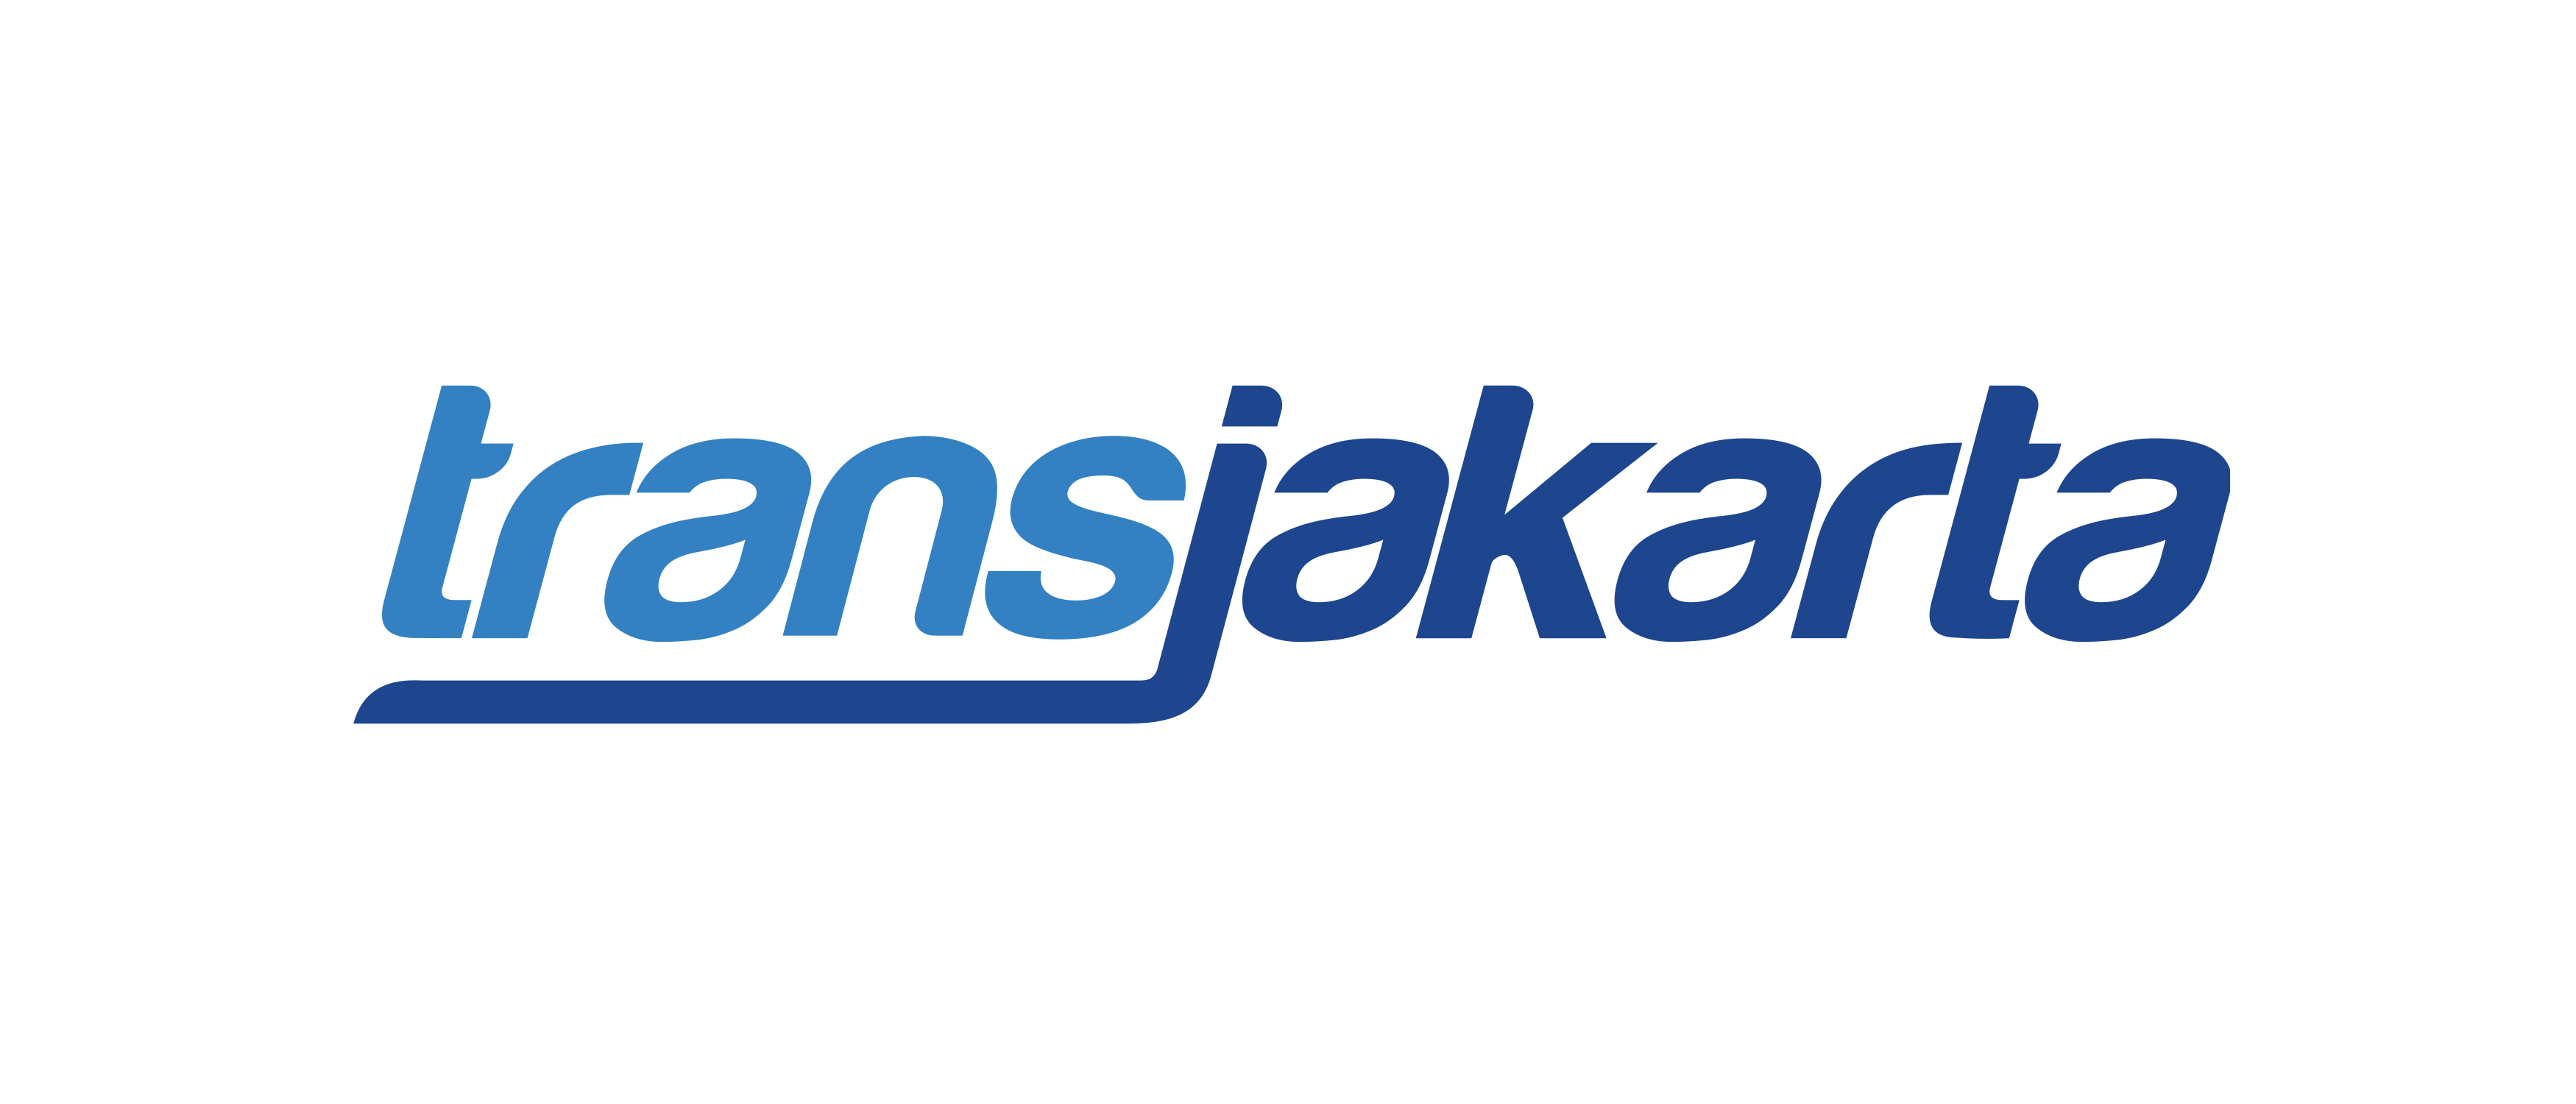 Transjakarta logo